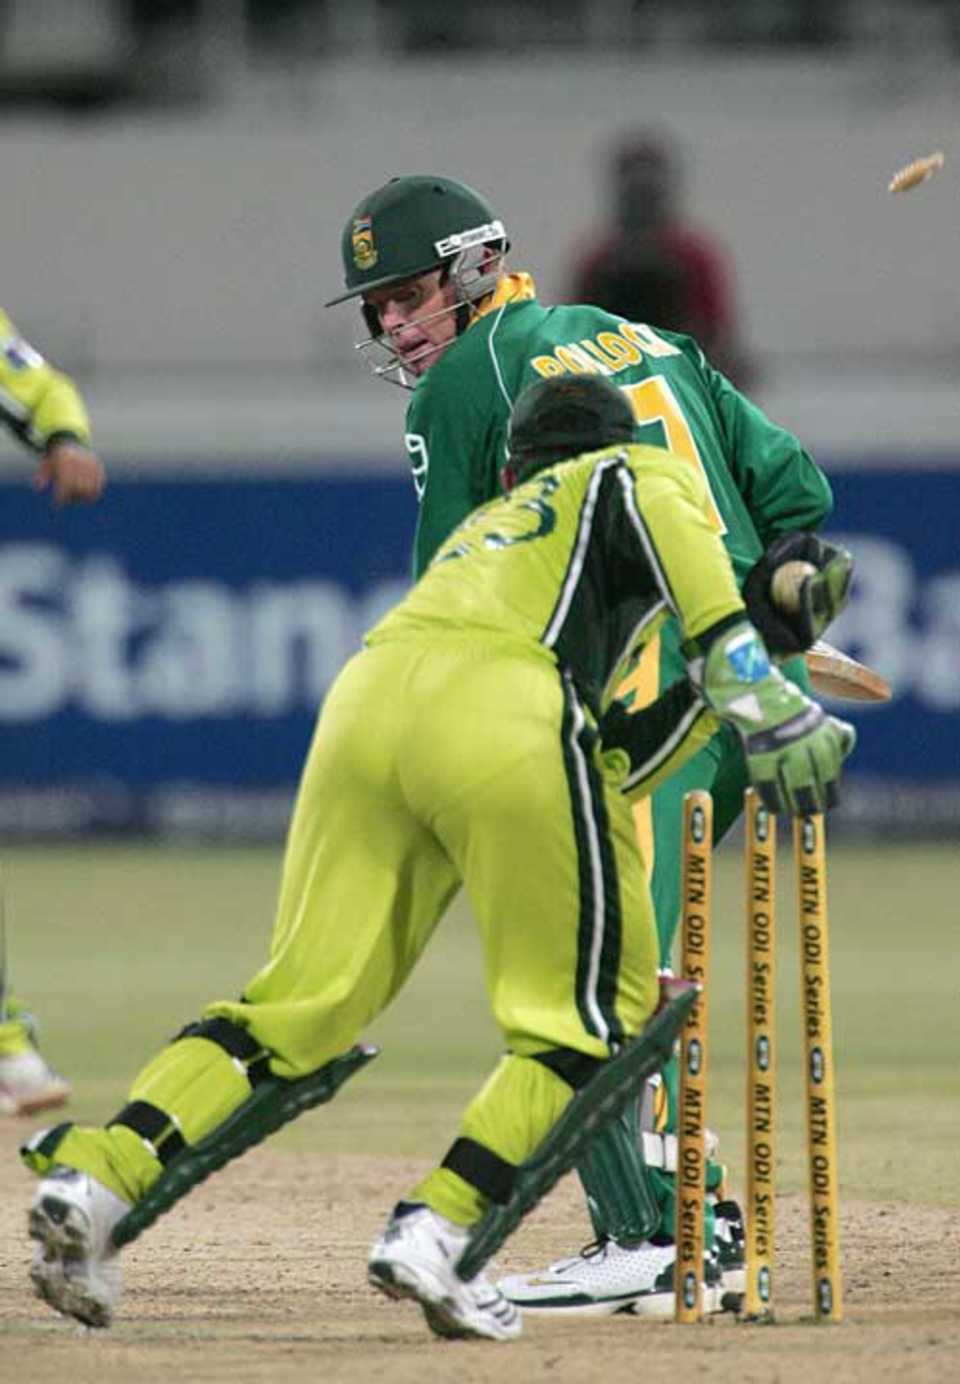 Shaun Pollock is stumped by Kamran Akmal as Pakistan win by 141 runs, South Africa v Pakistan, 2nd ODI, Durban, February 7, 2007